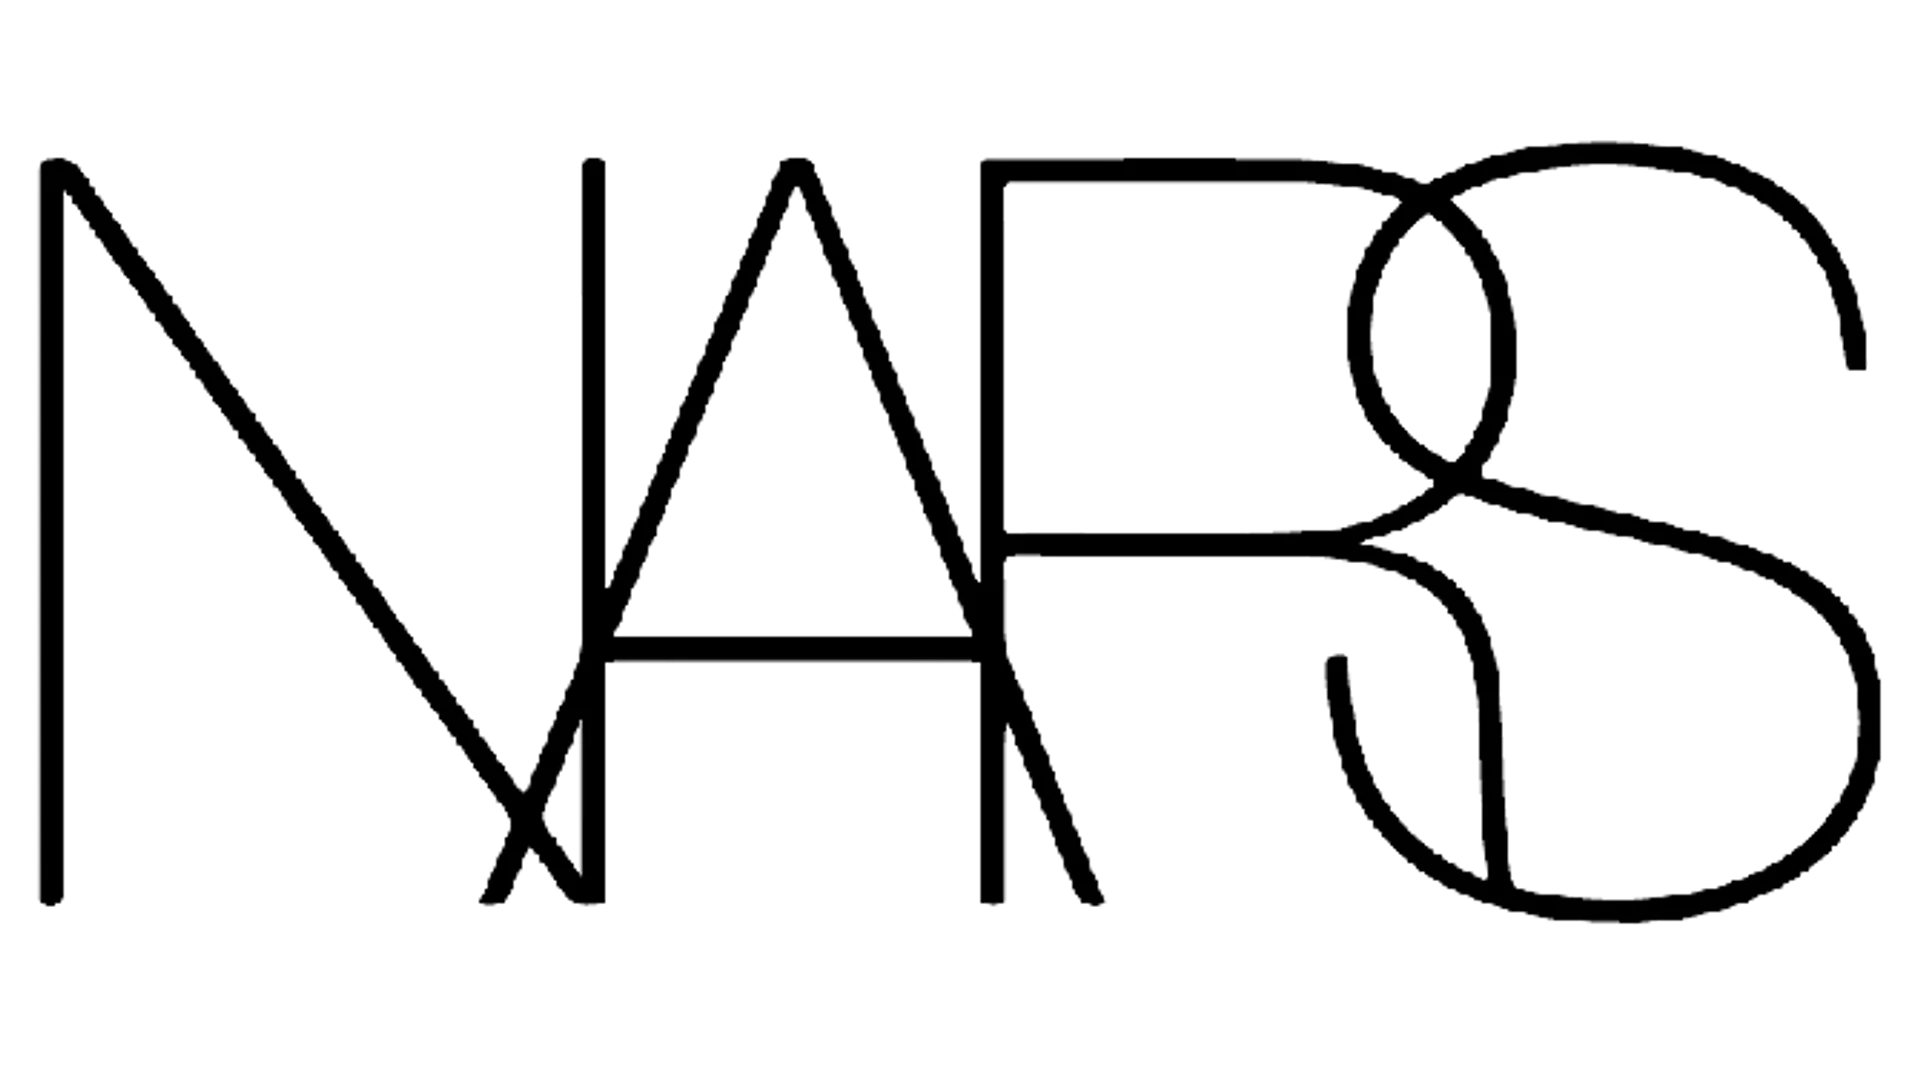 NARS logo